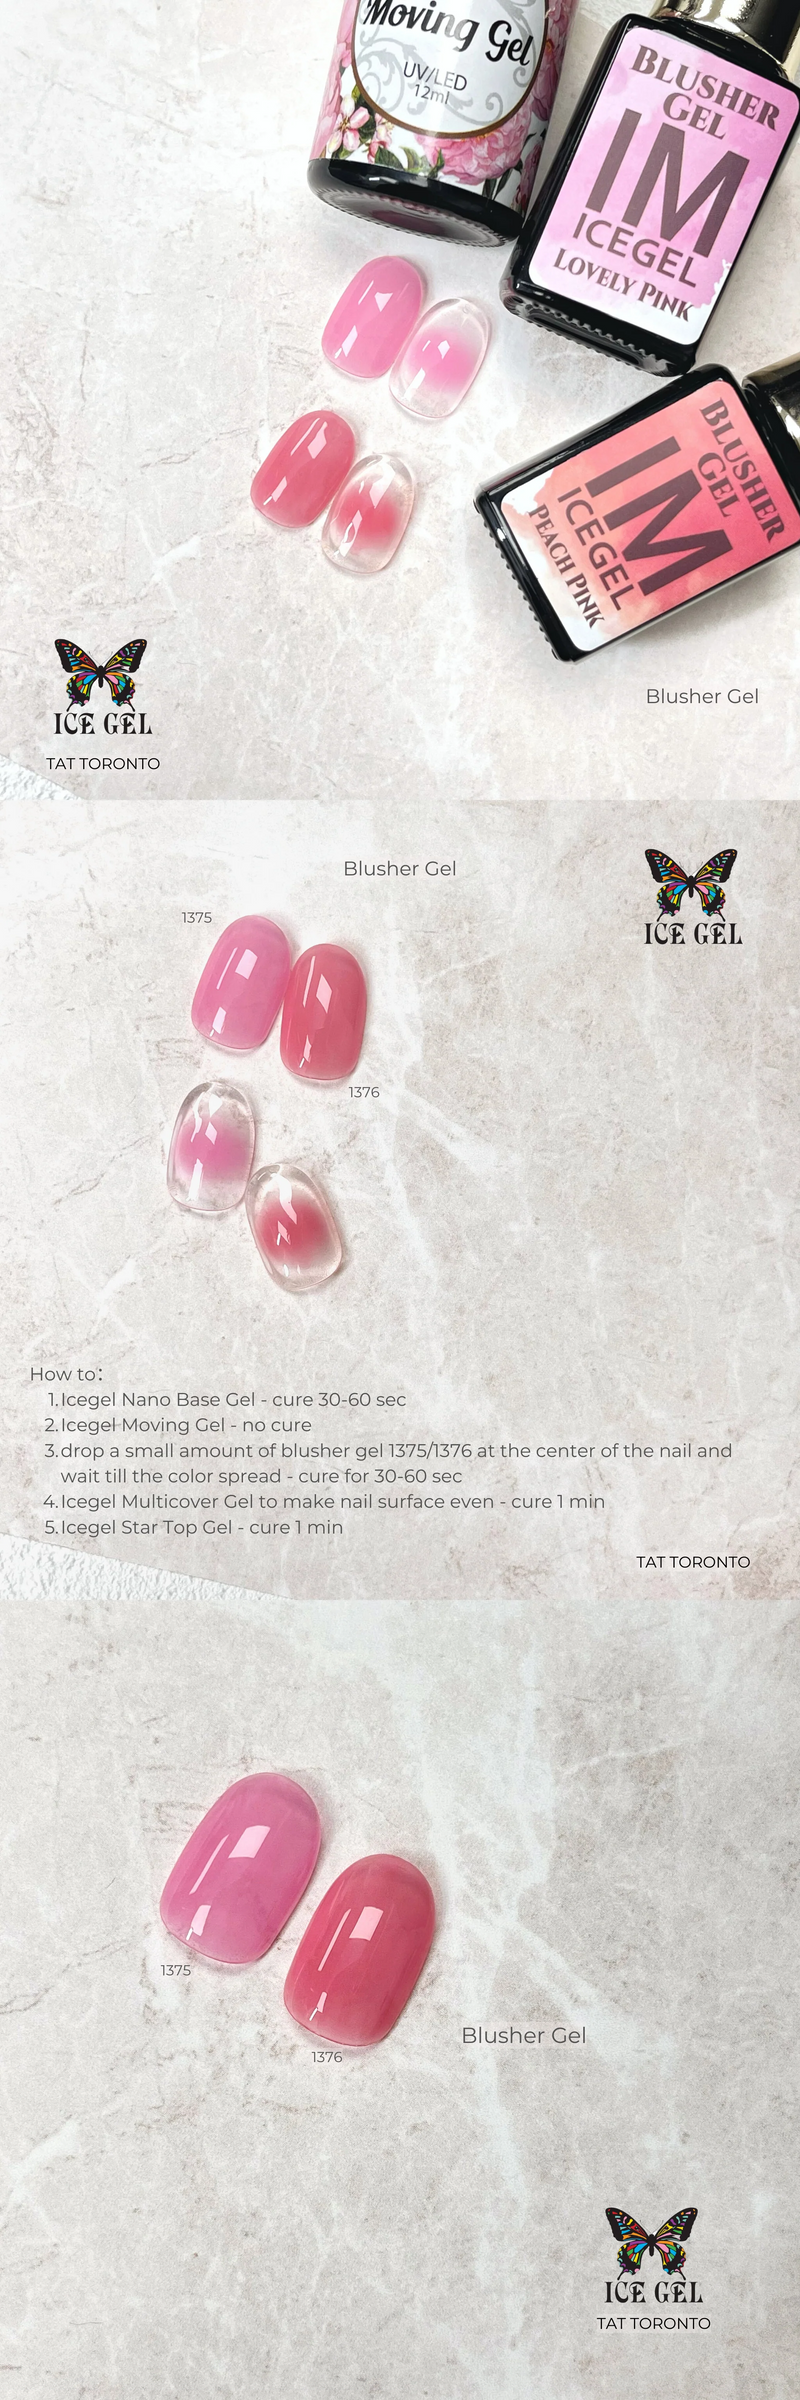 ICEGEL Blusher gel nail polish 1375 - 1376